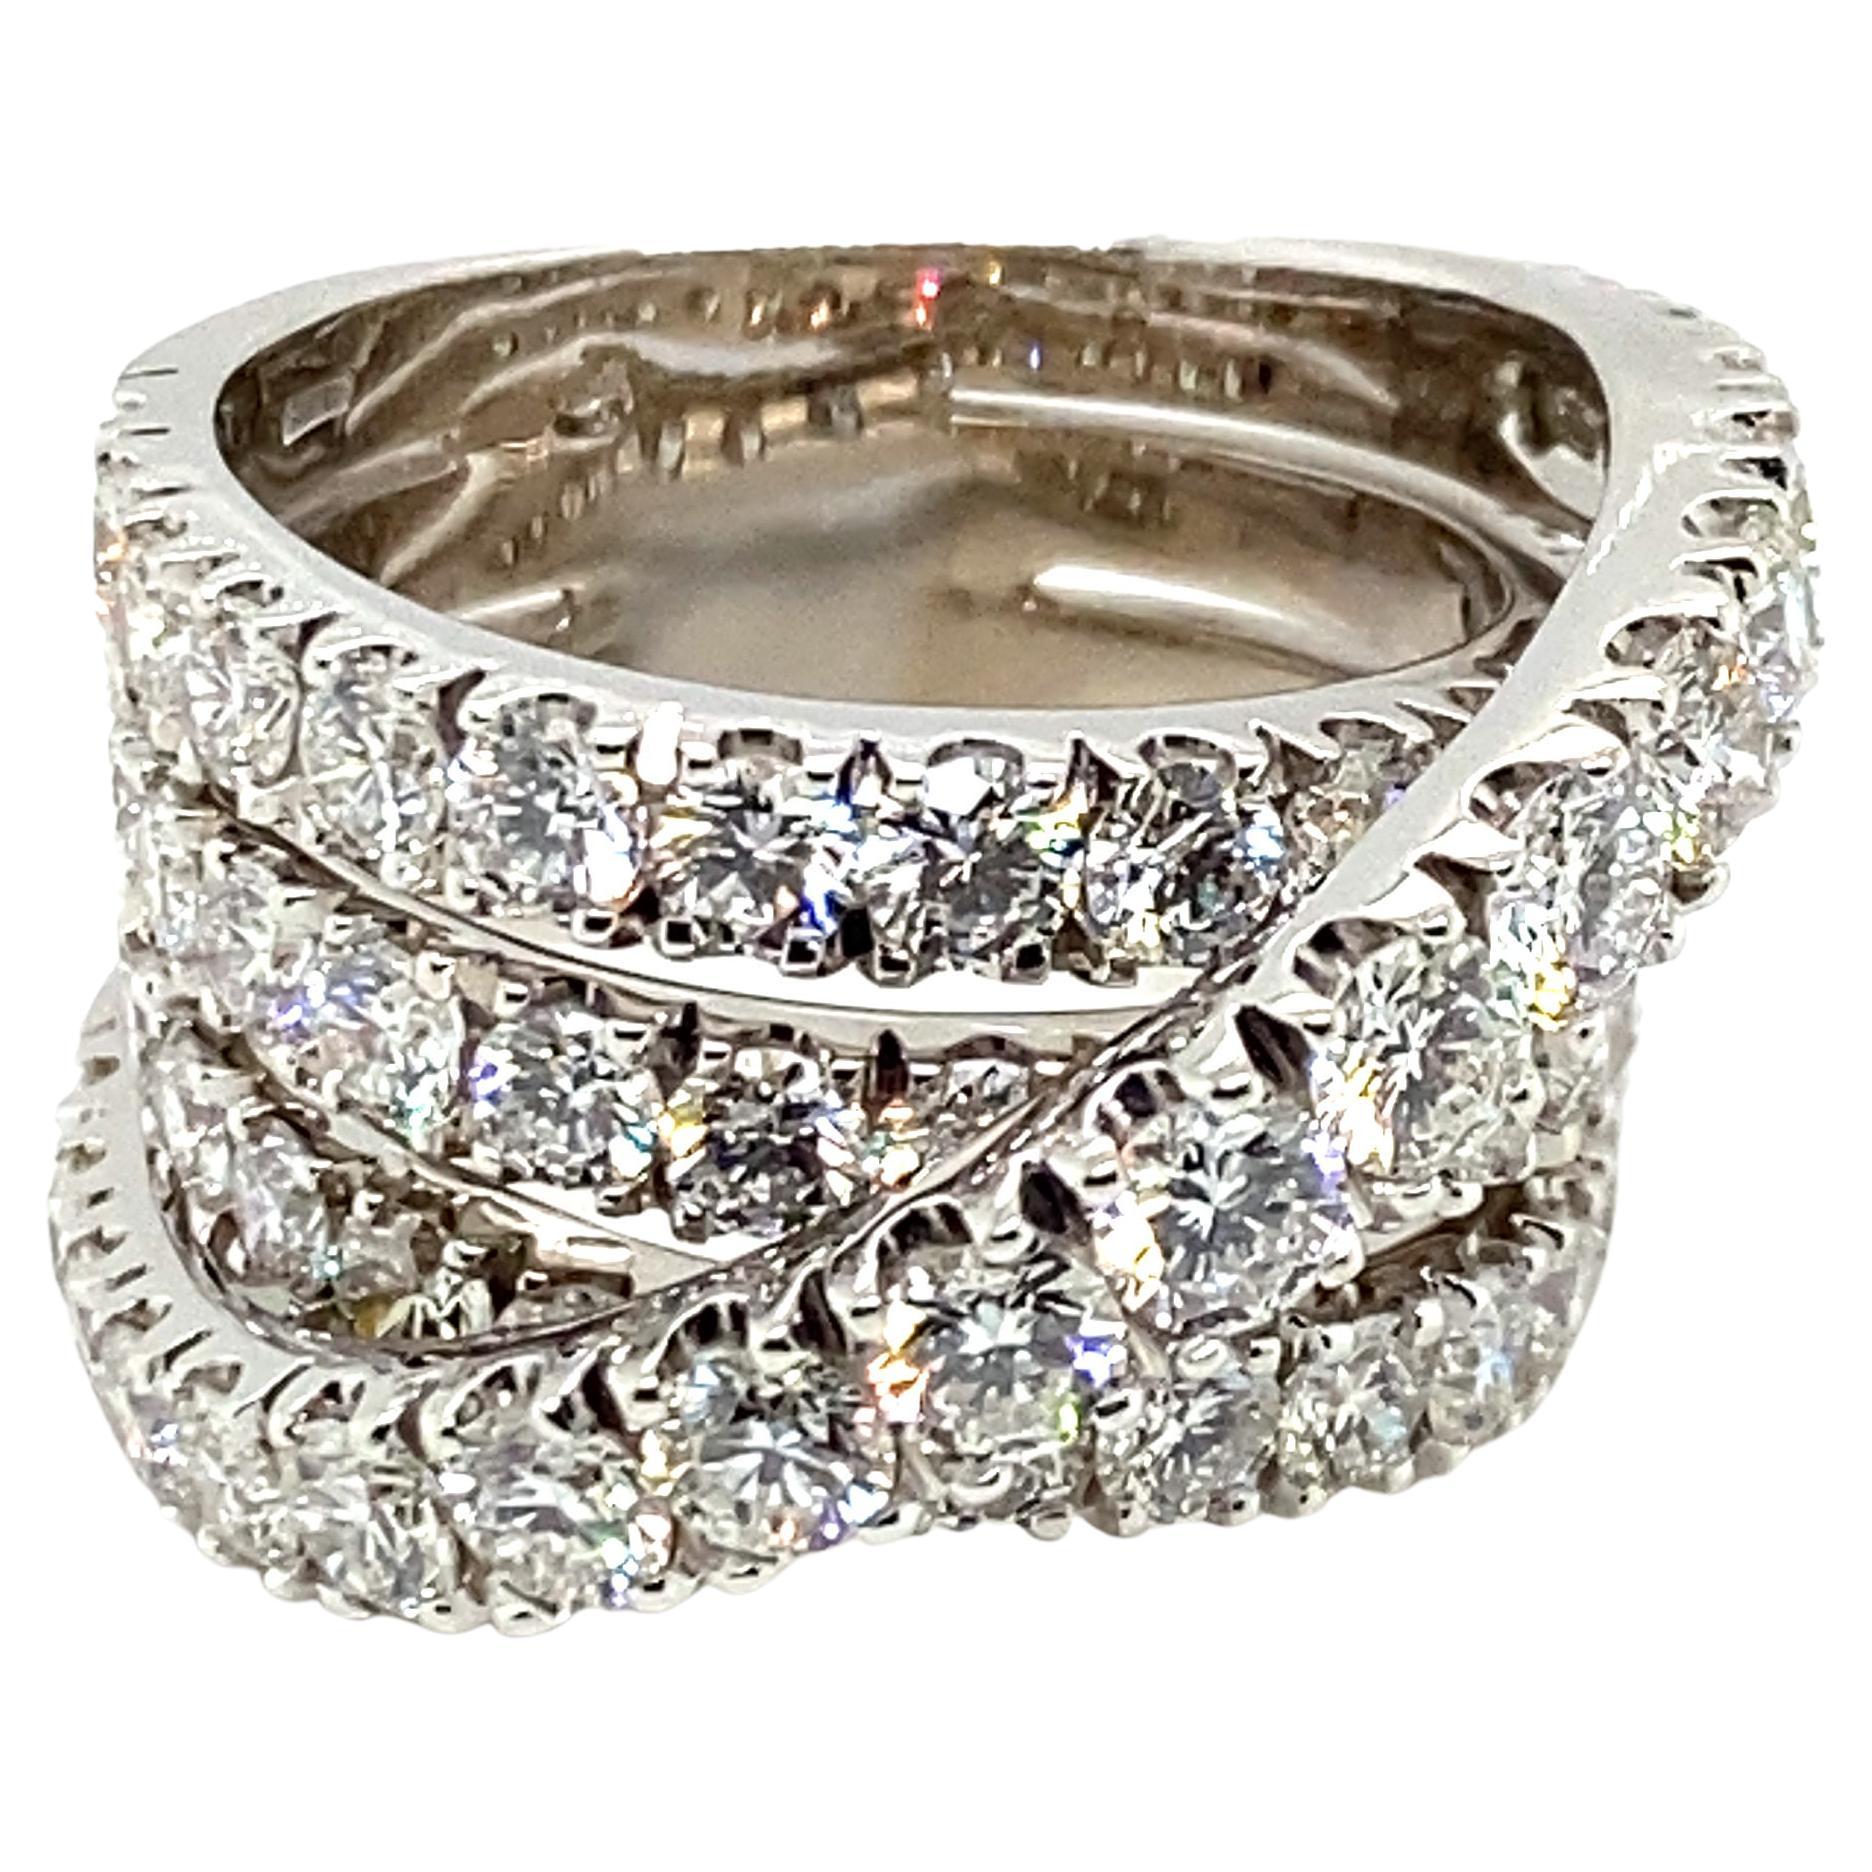 Super Sparkling Diamond Ring by Crivelli in 18 Karat White Gold